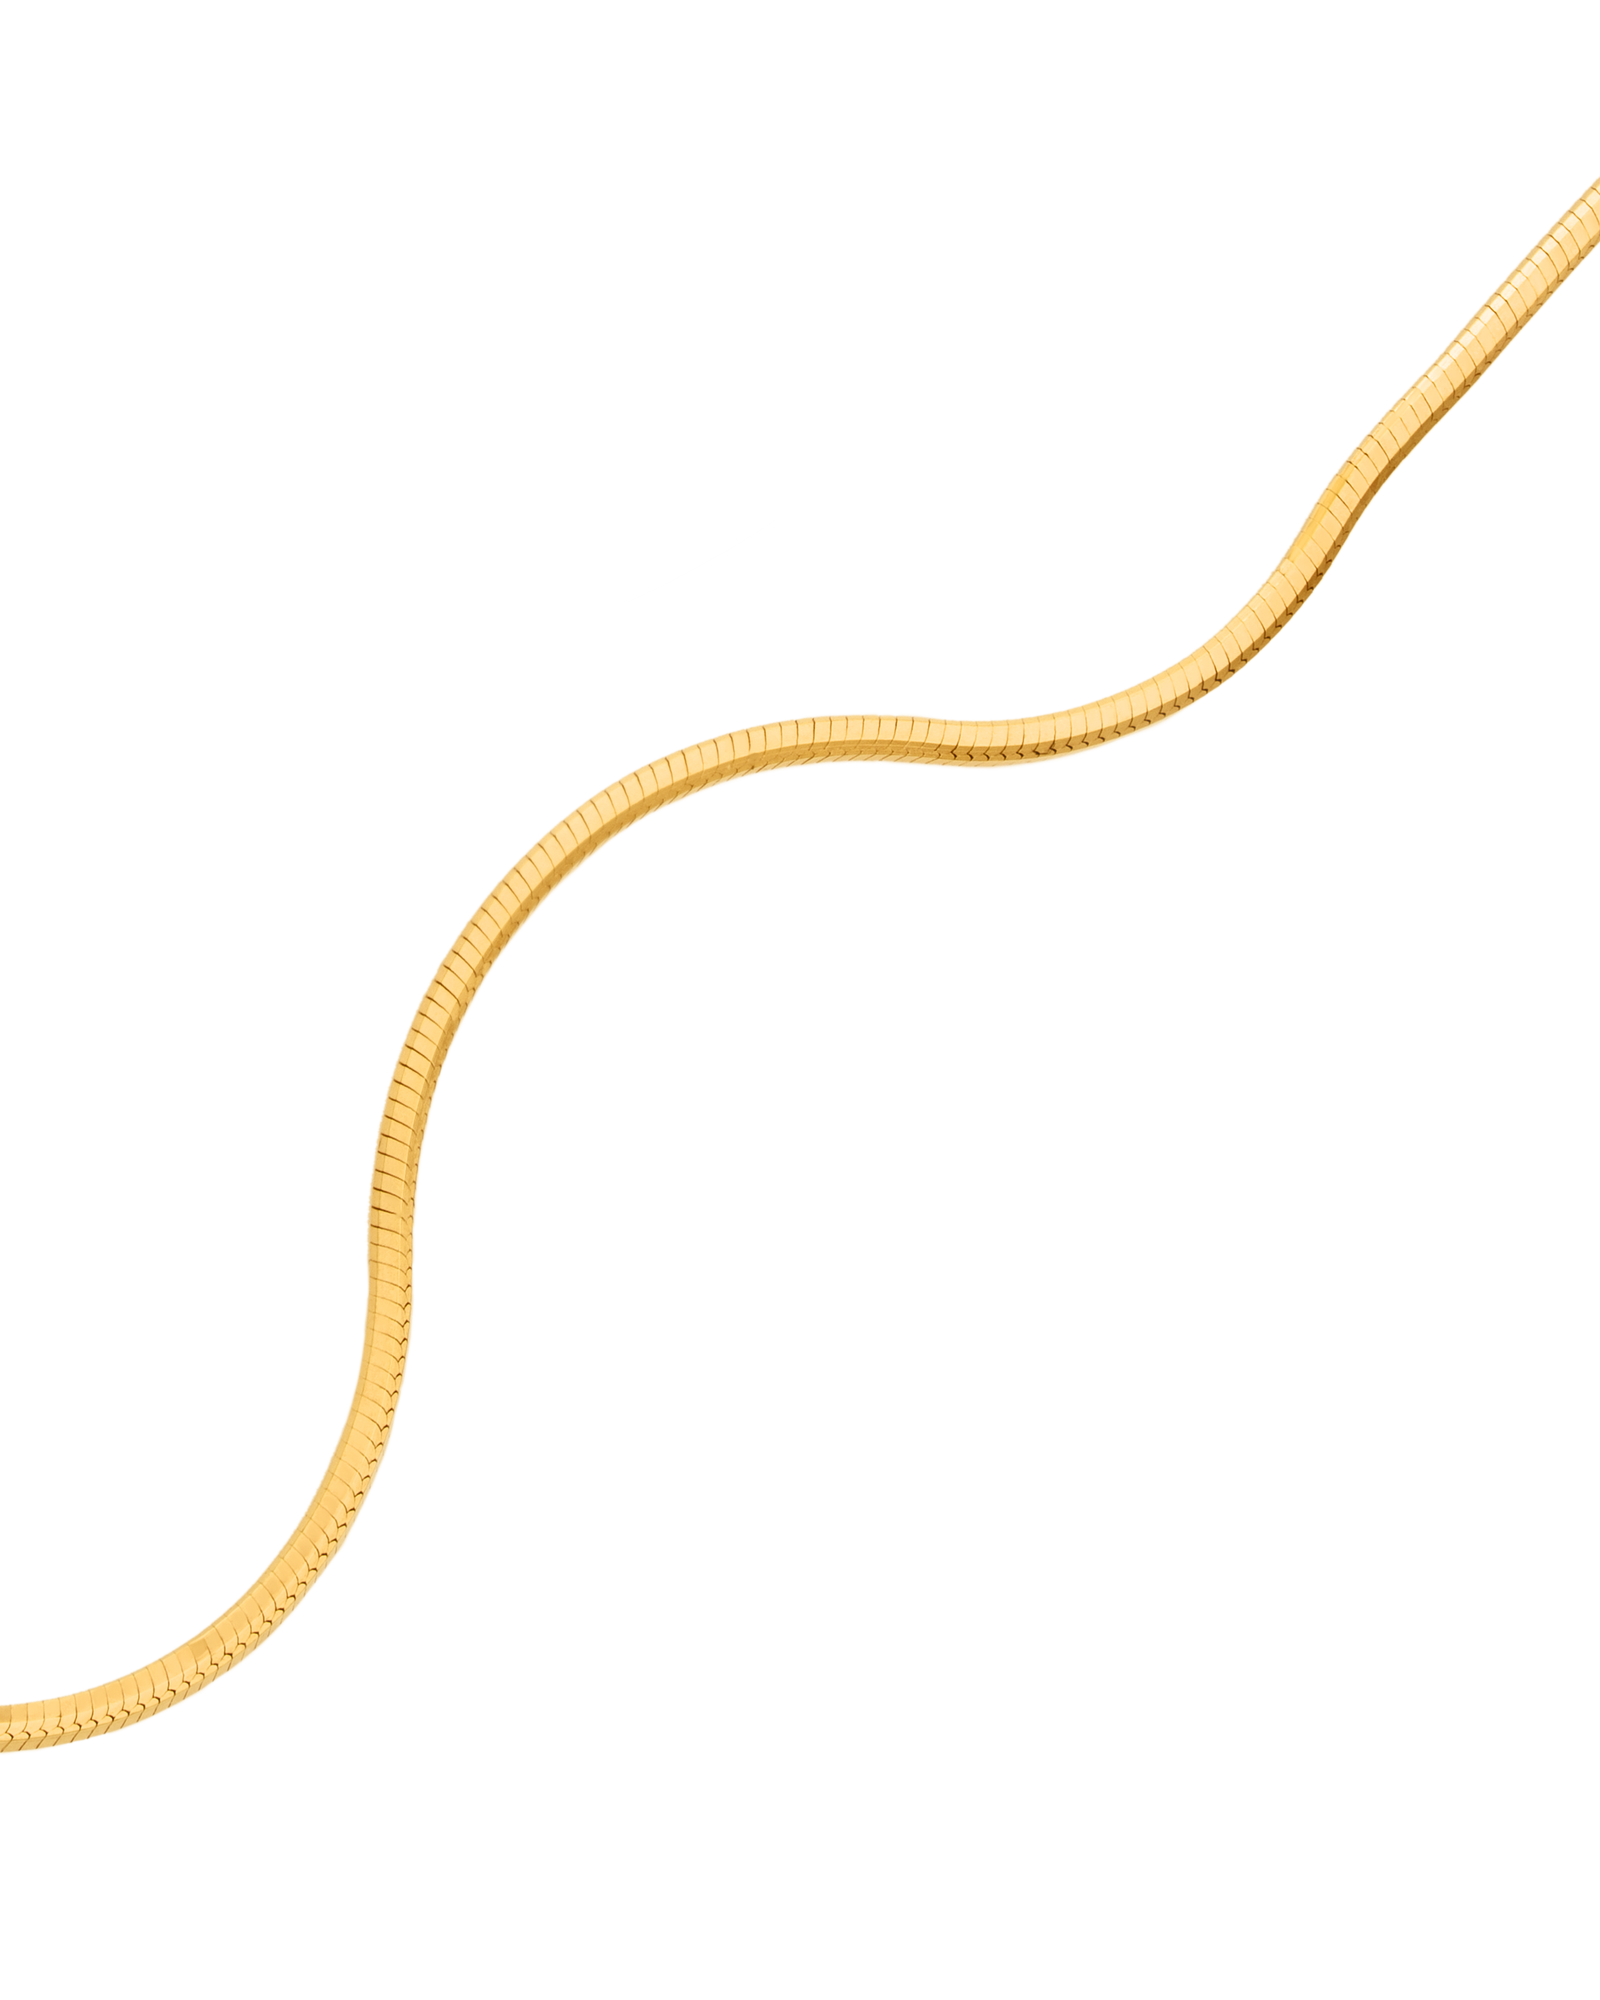 Snake Chain 2mm